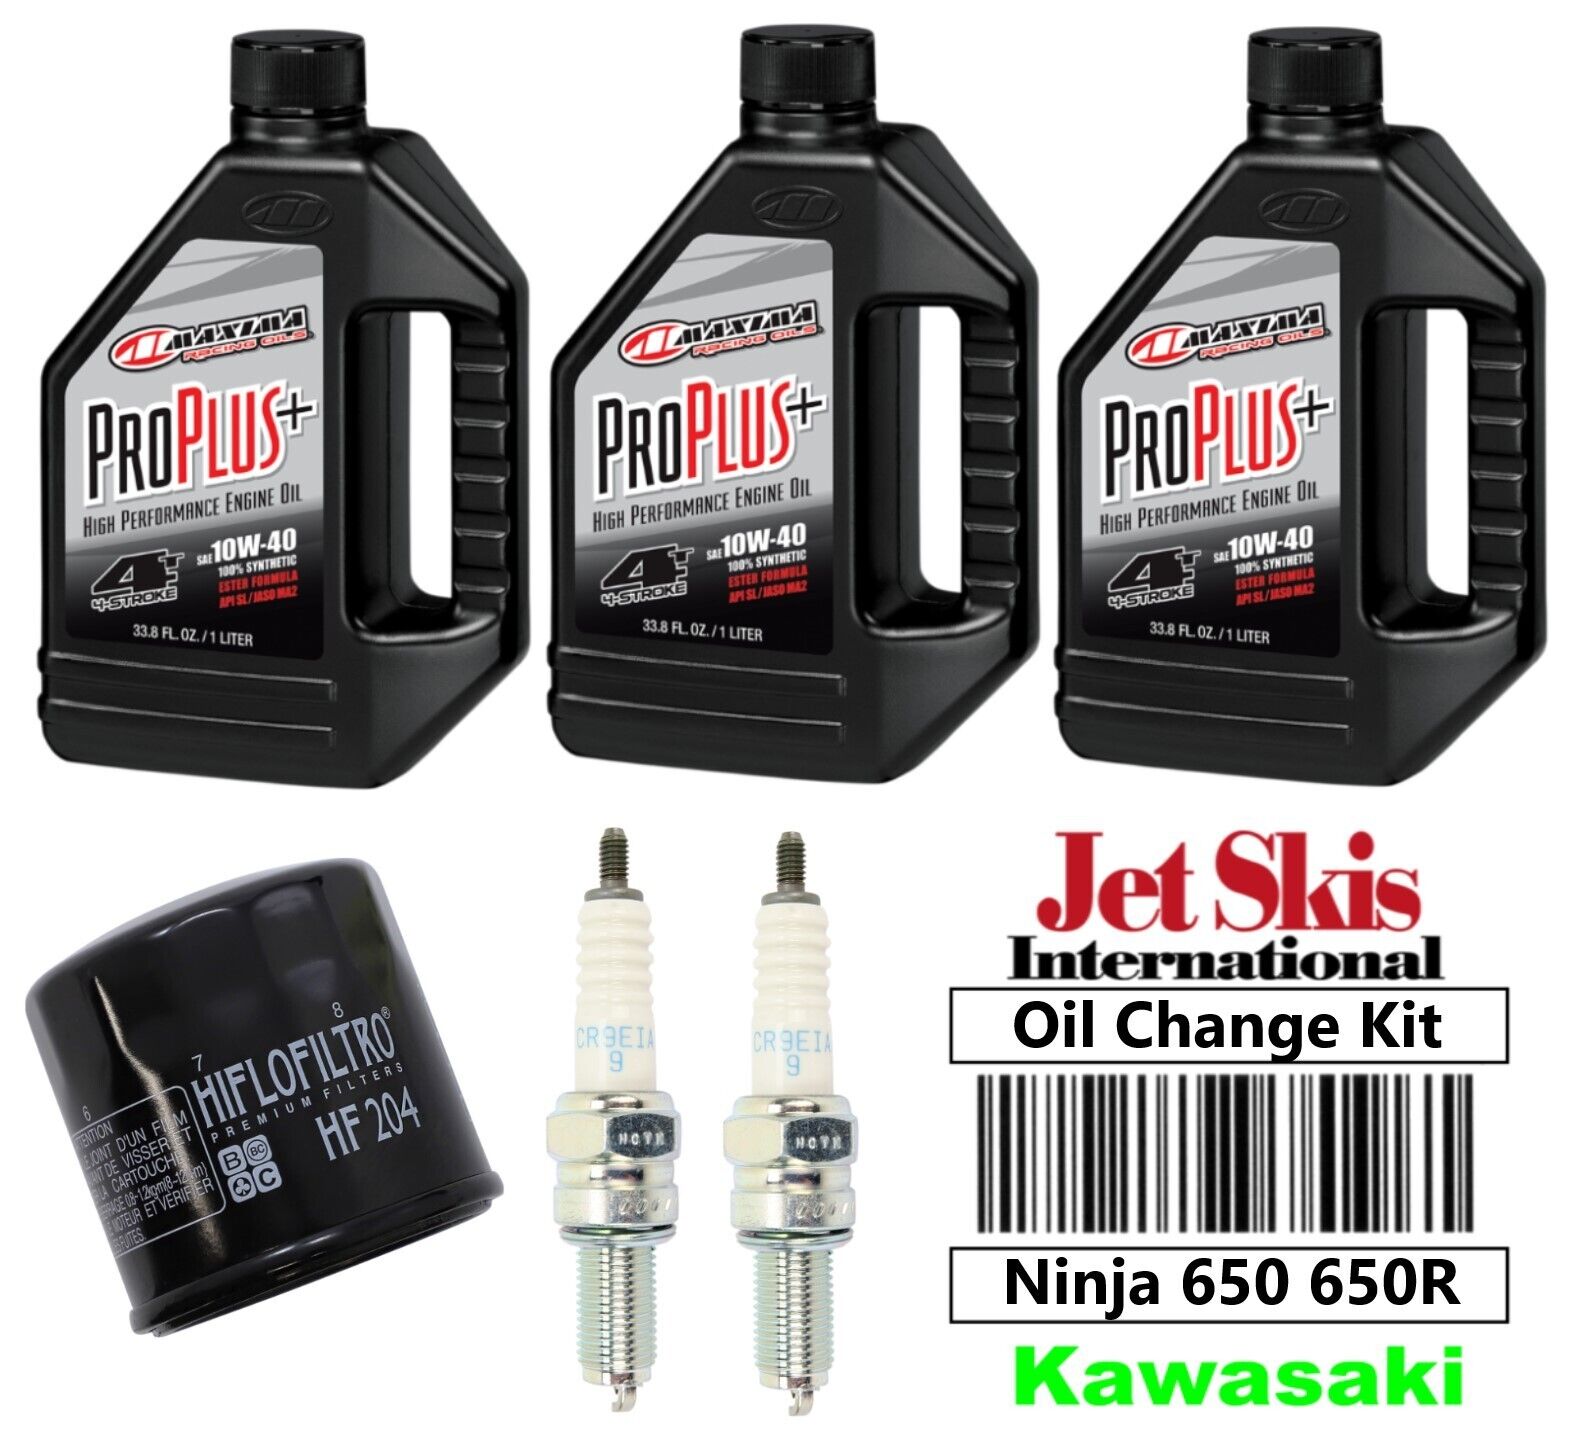 For Kawasaki Ninja 650 650R Synthetic Oil Change Kit NGK Spark Plugs Oil Filter